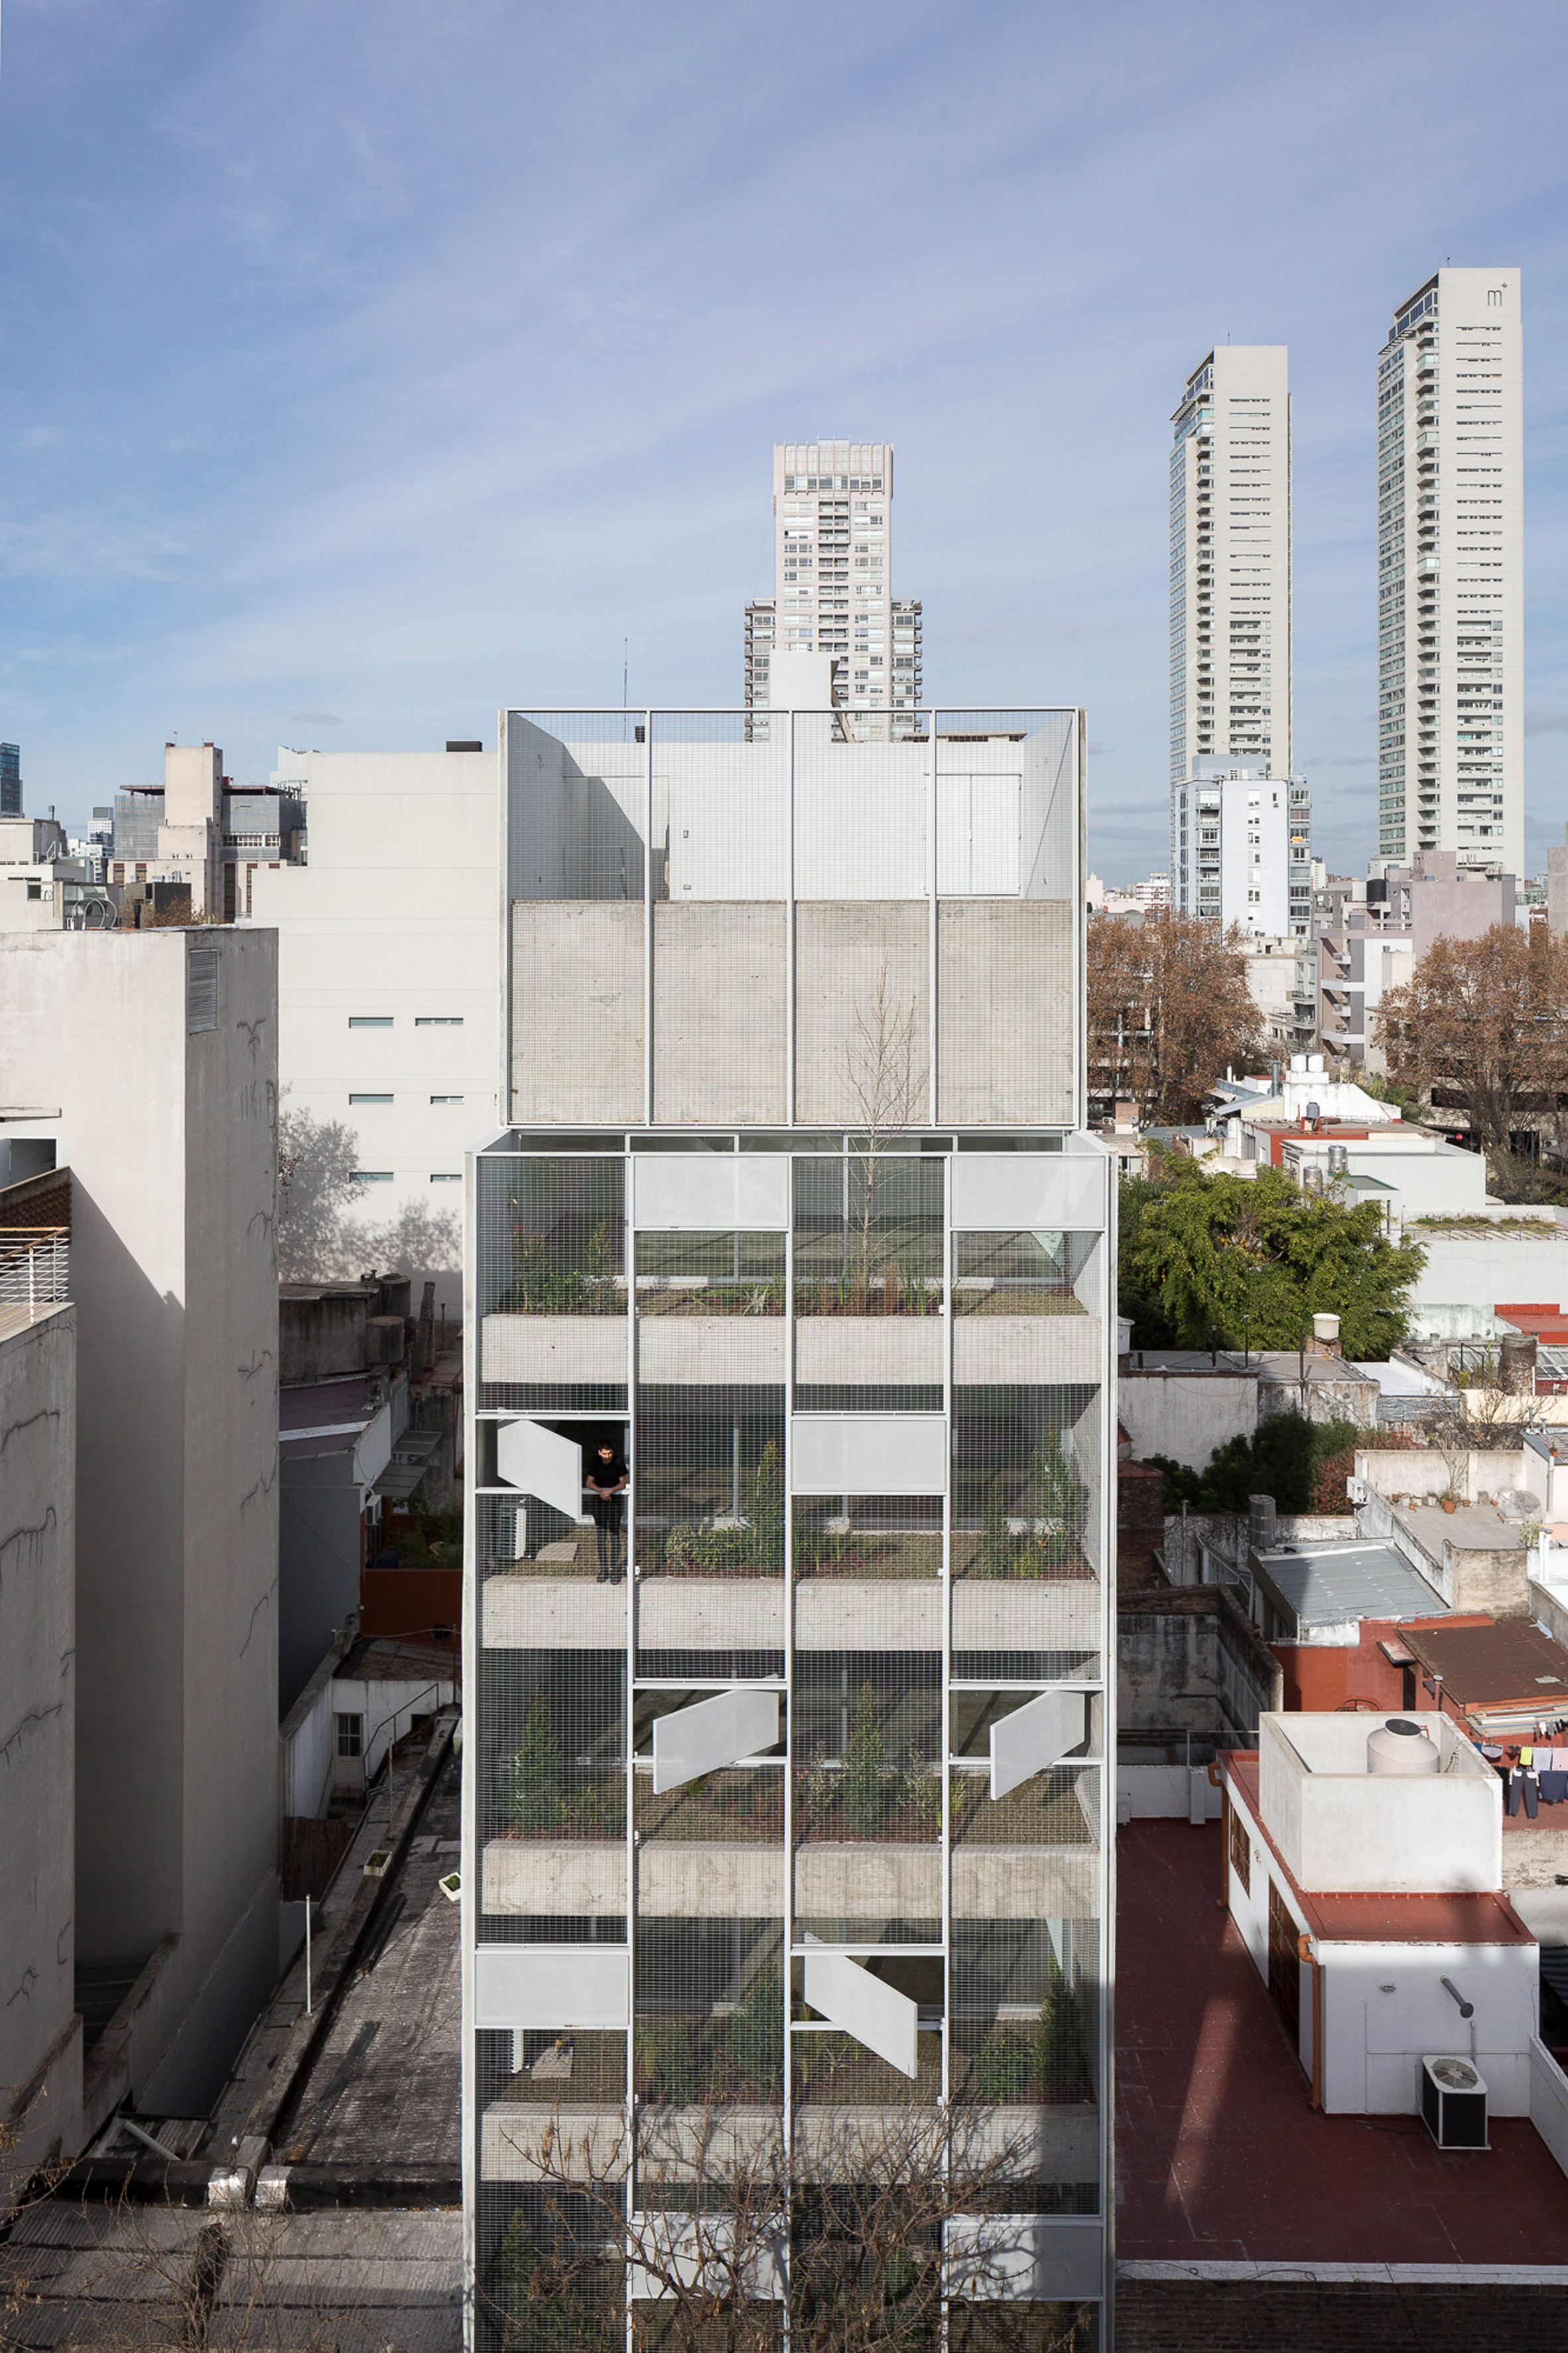 Metal mesh covers garden tower in Buenos Aires by Adamo-Faiden